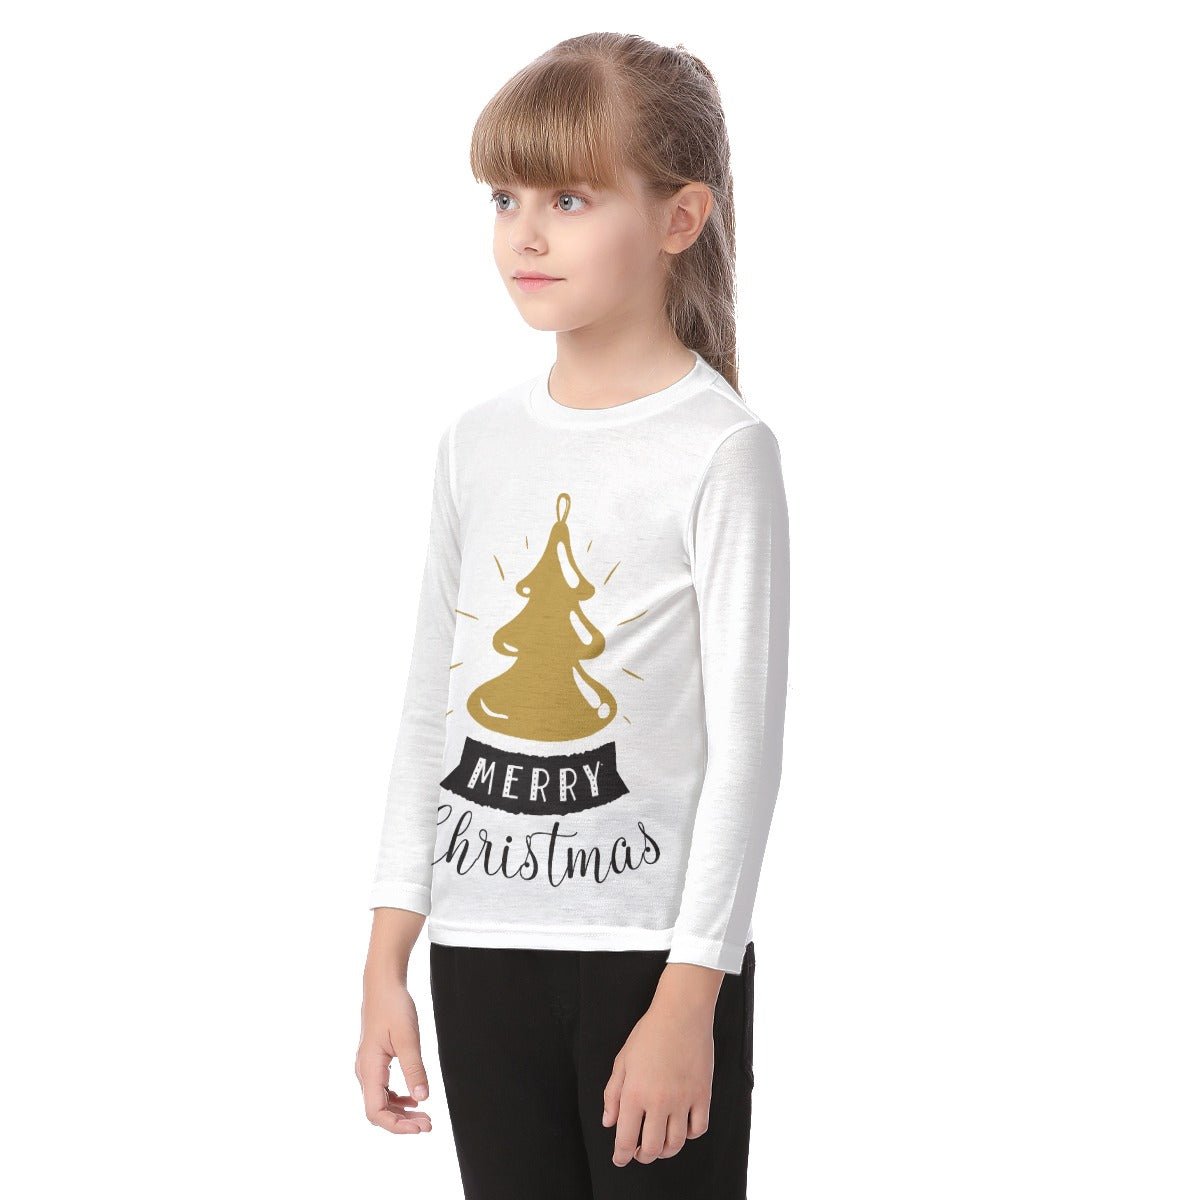 Kid's Long Sleeve Christmas T-shirt - Merry Christmas - Gold Tree - Festive Style